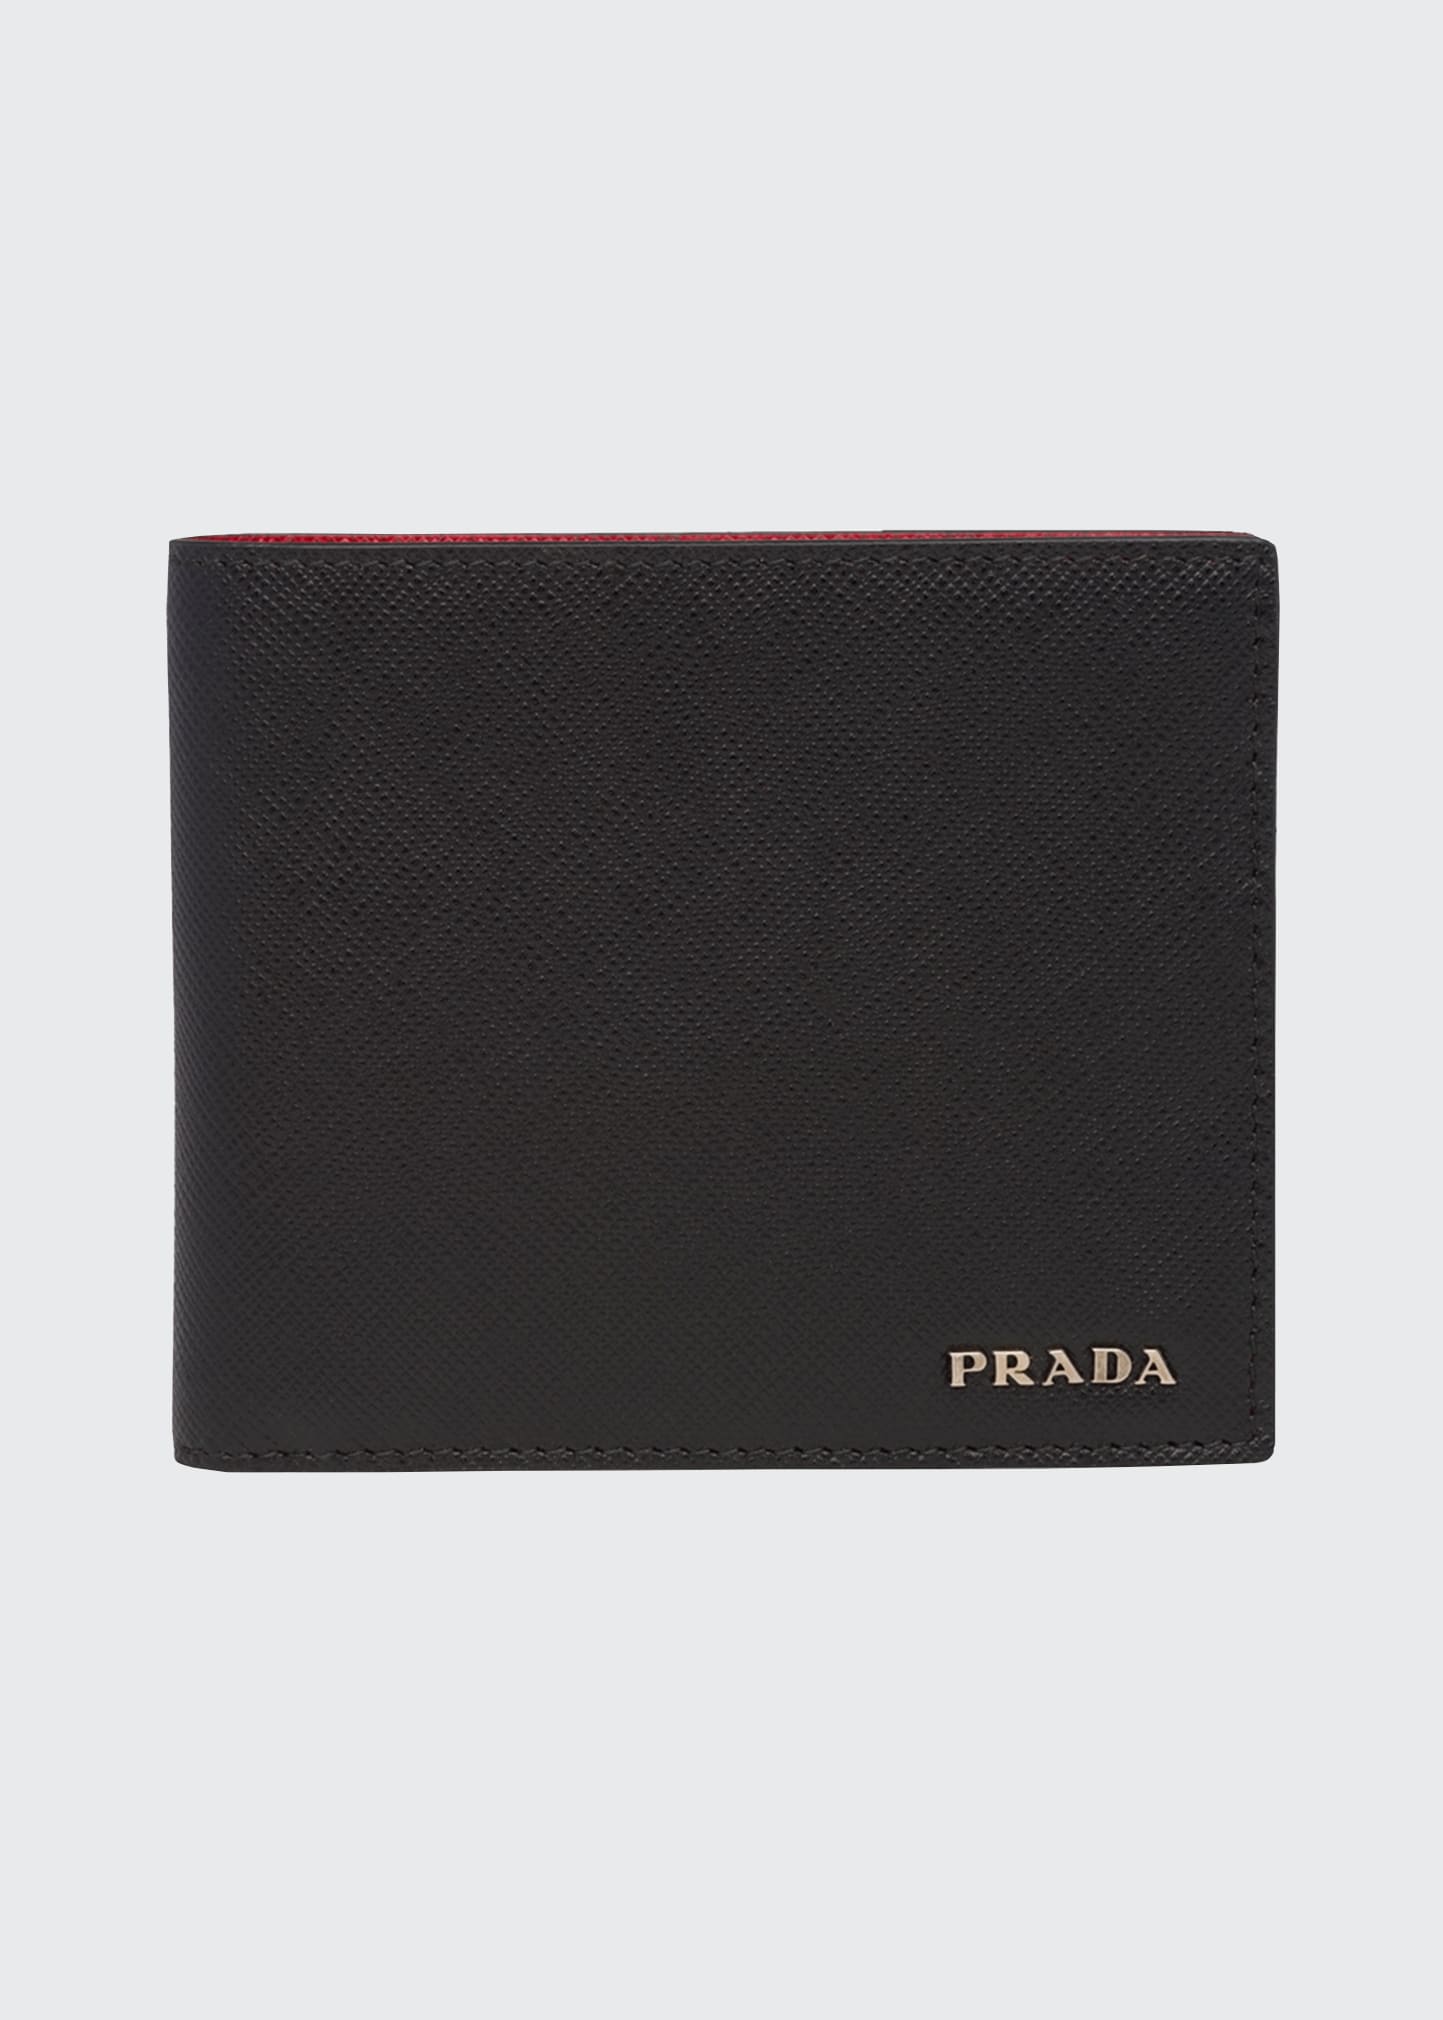 Prada Bi-Fold Wallet Saffiano Leather Nero/Baltico